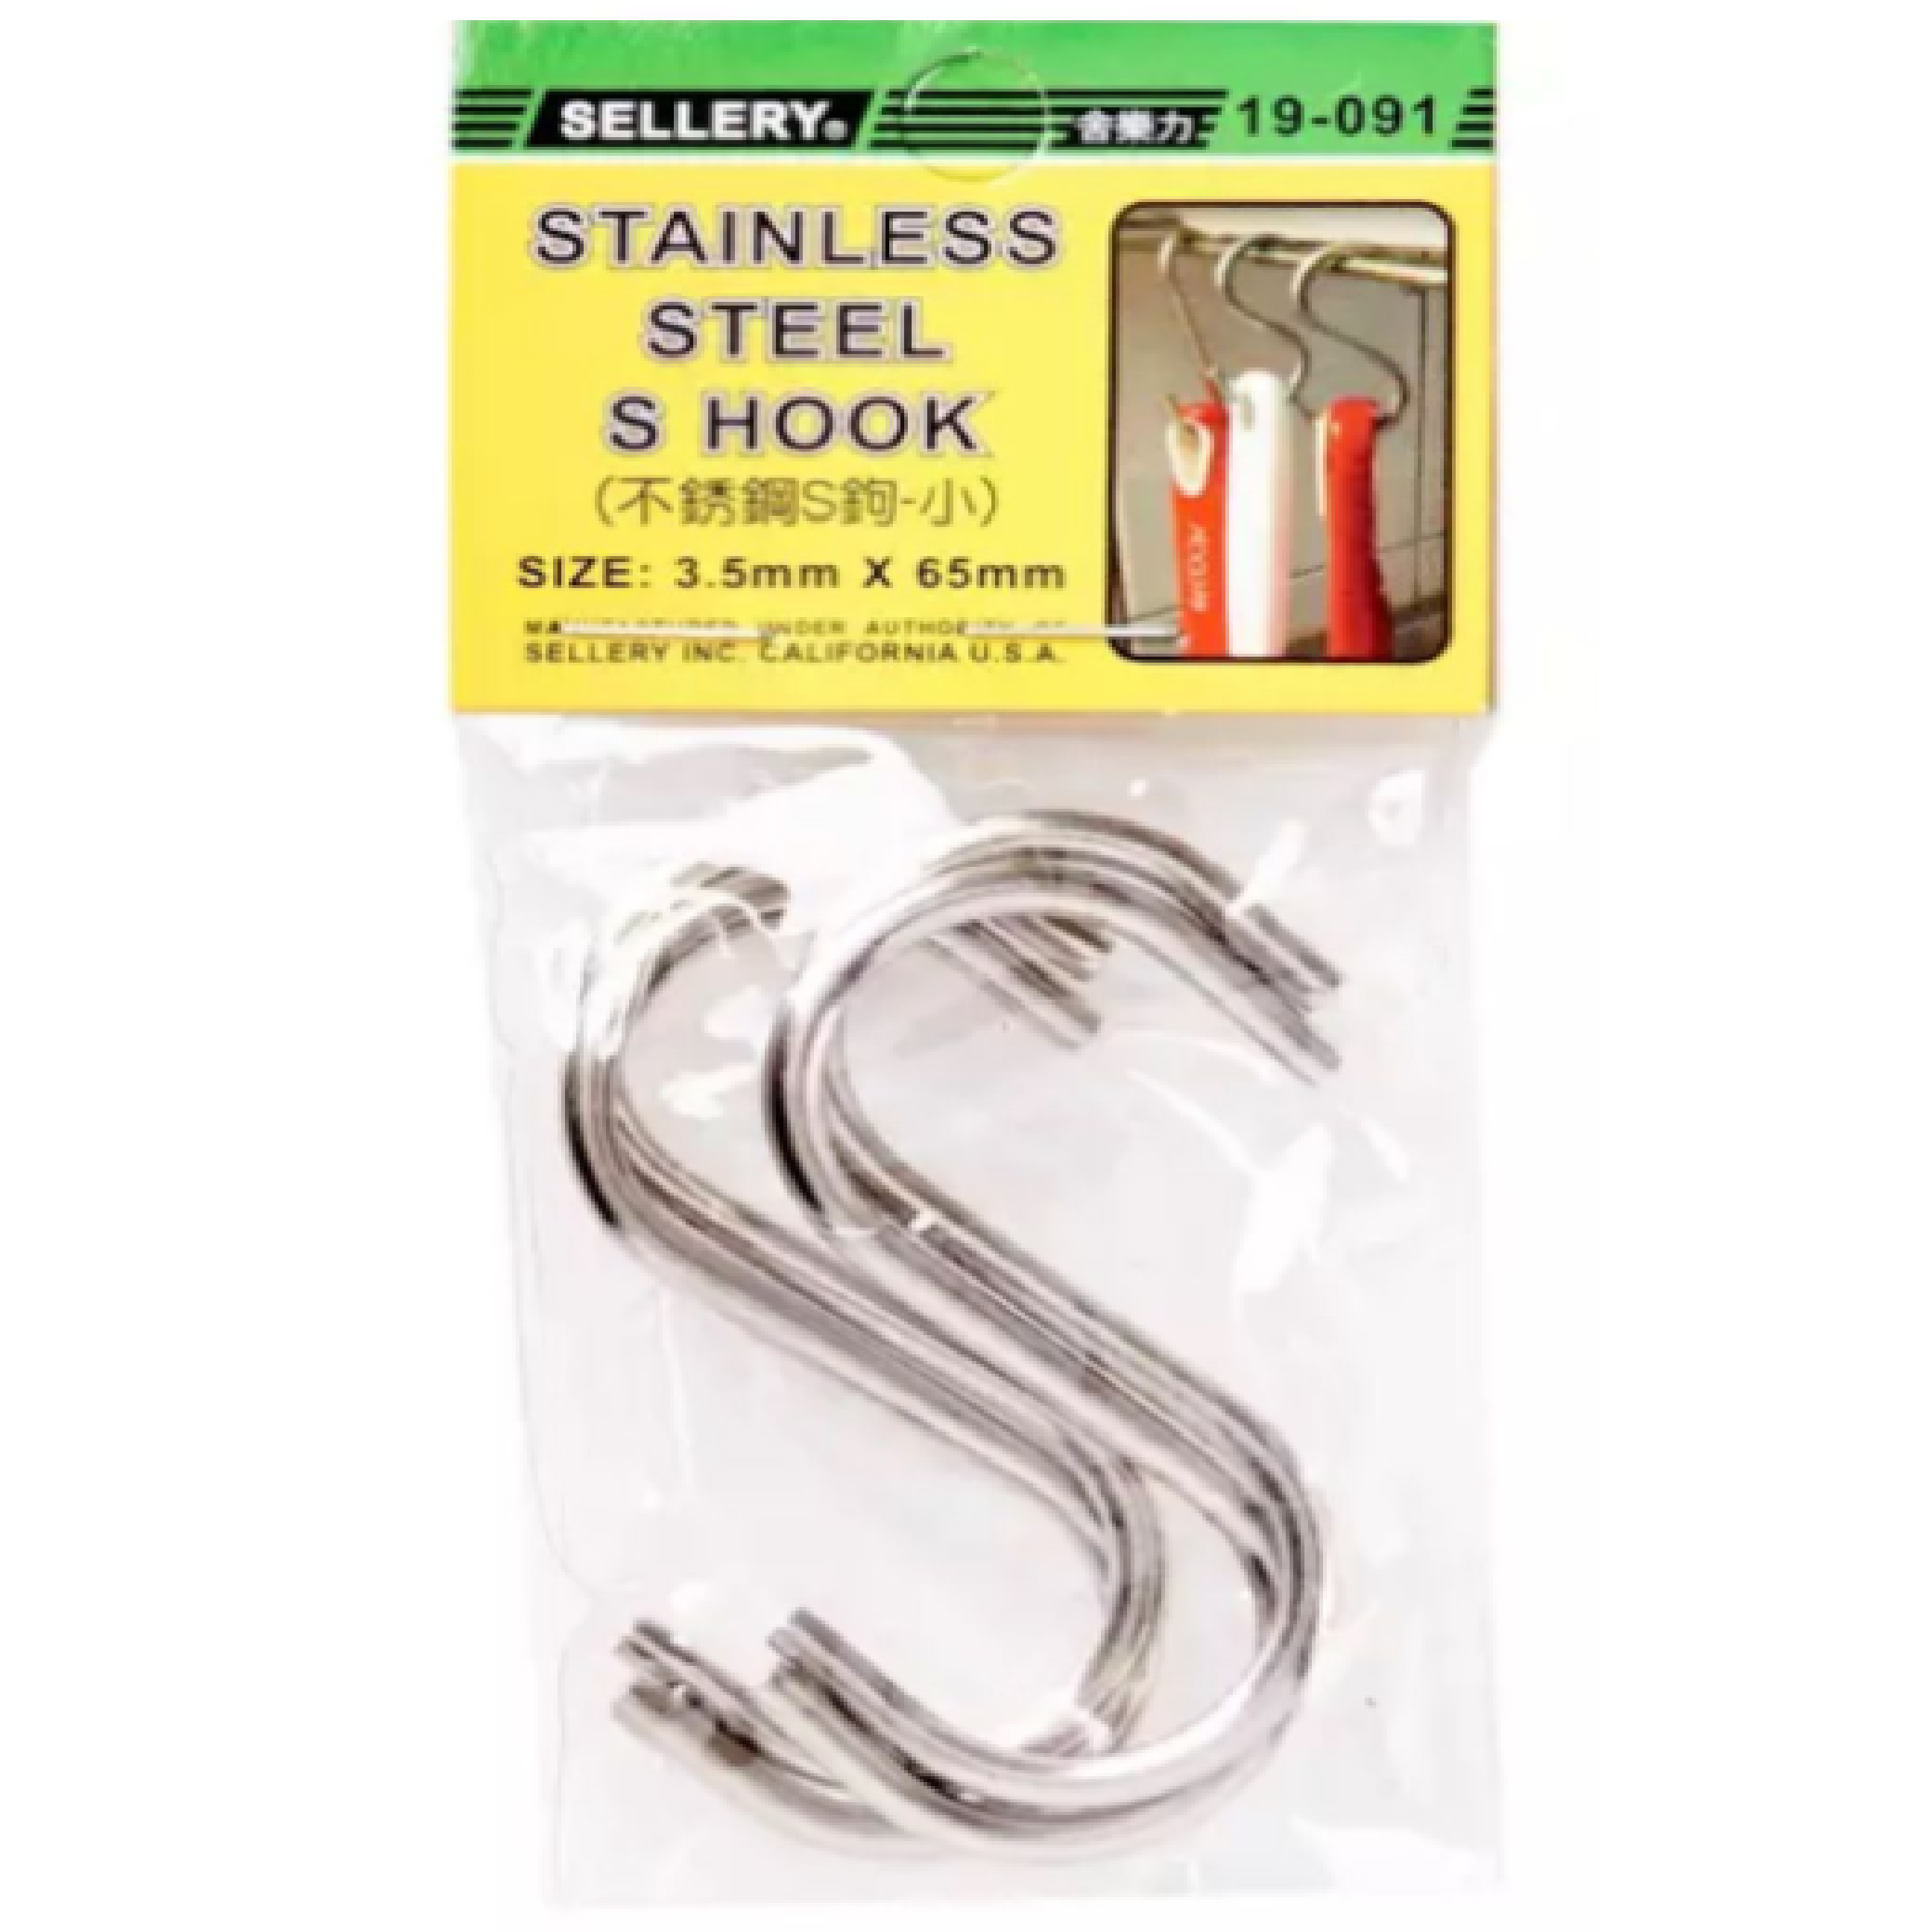 Sellery Stainless Steel S Hook 2PC/Pack 19-091